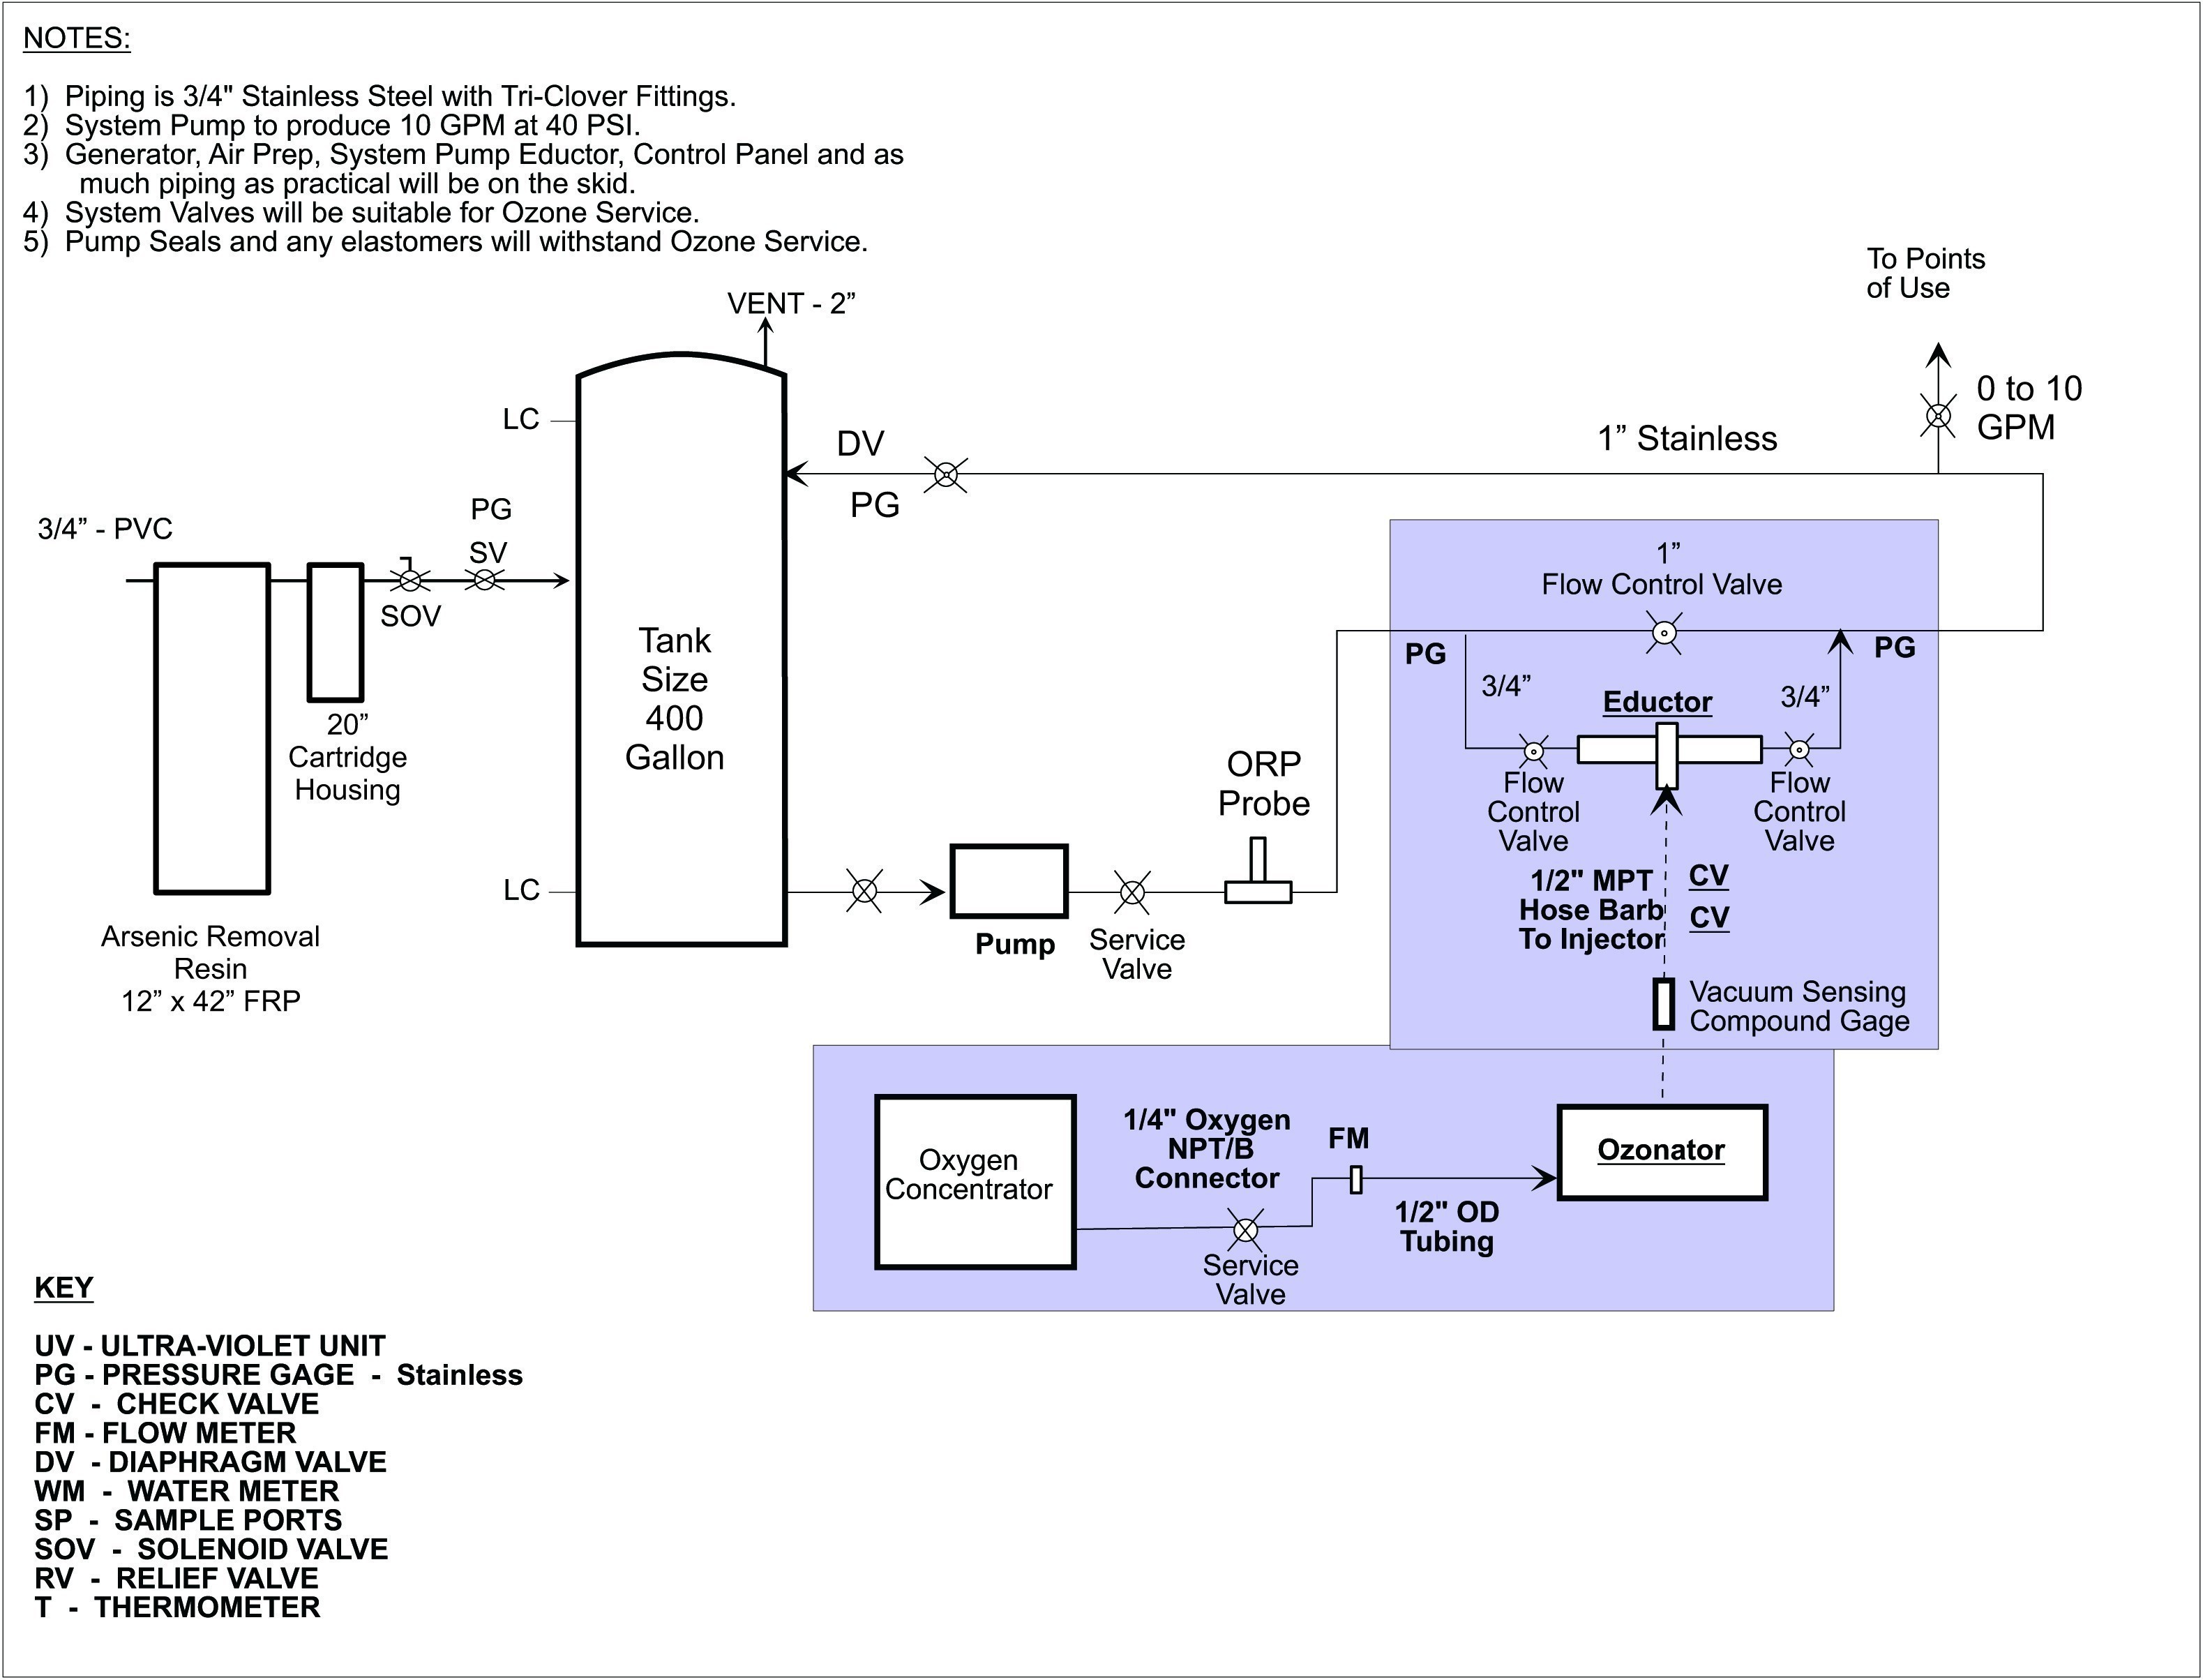 Wiring Diagram for Car Trailer Inspirationa Wiring Diagram for Trailer Hitch Plug Fresh Wiring Diagram Semi